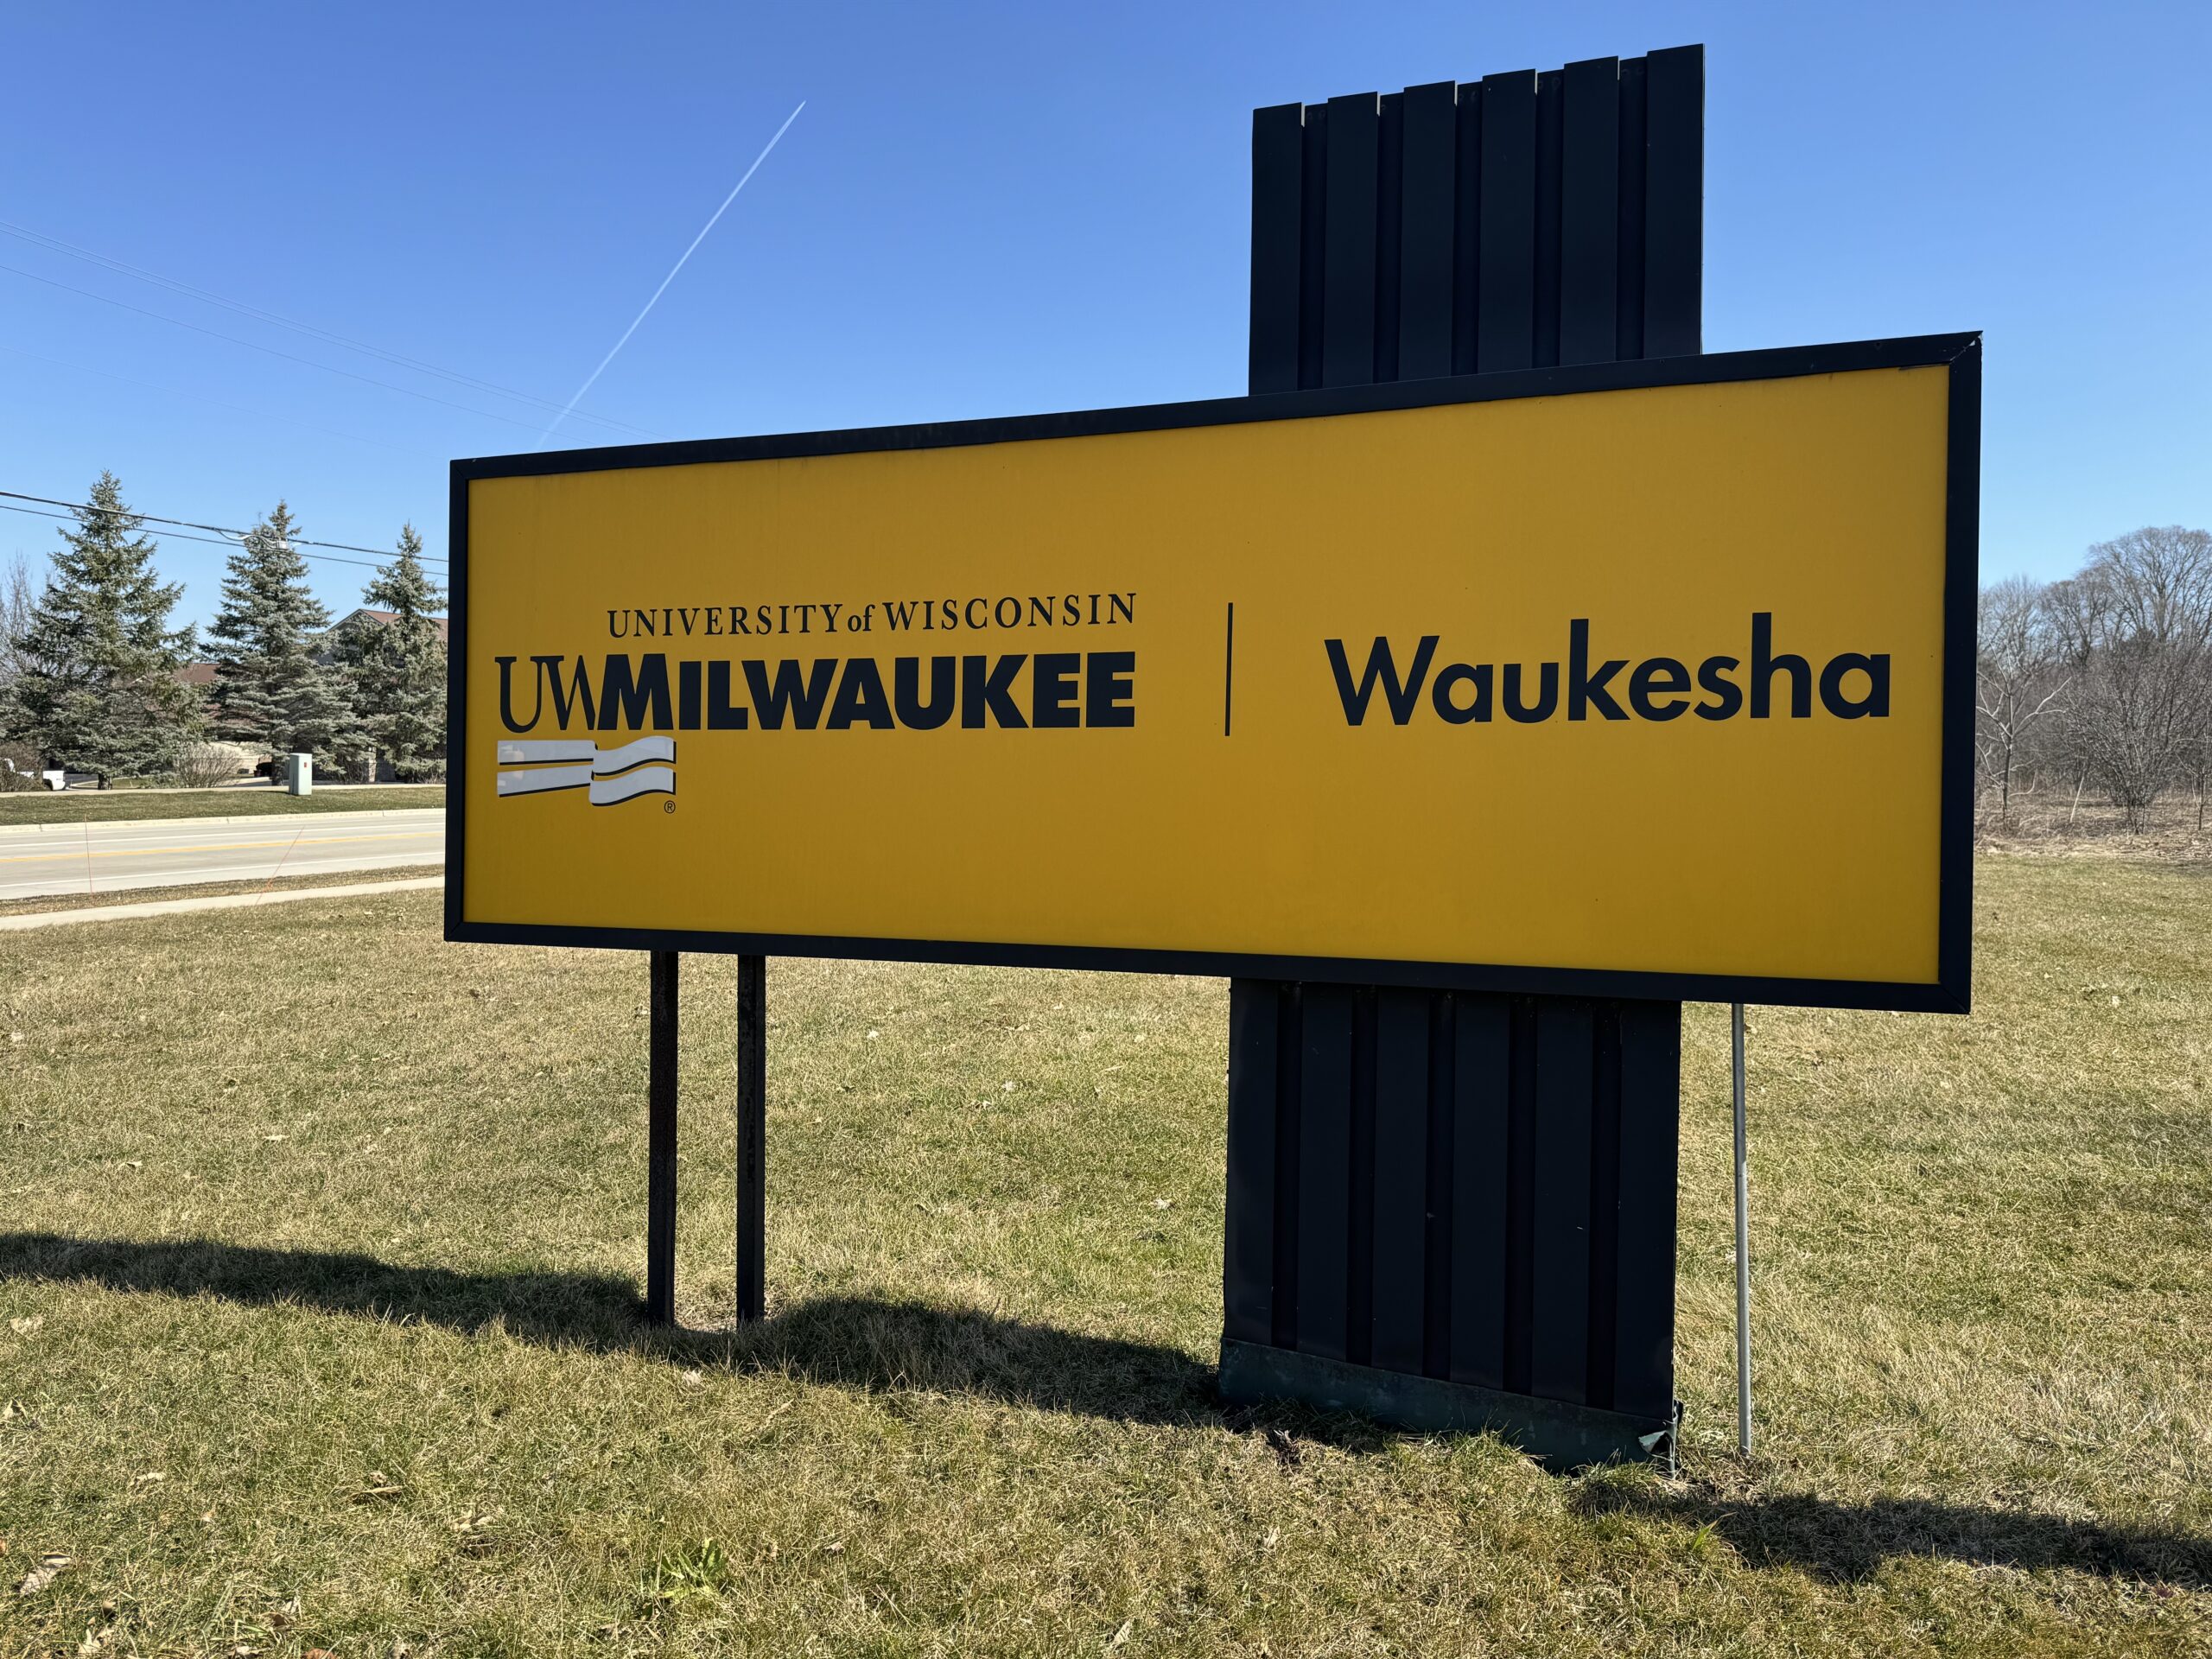 UW-Milwaukee announces closure of Waukesha campus in 2025, citing declining enrollment